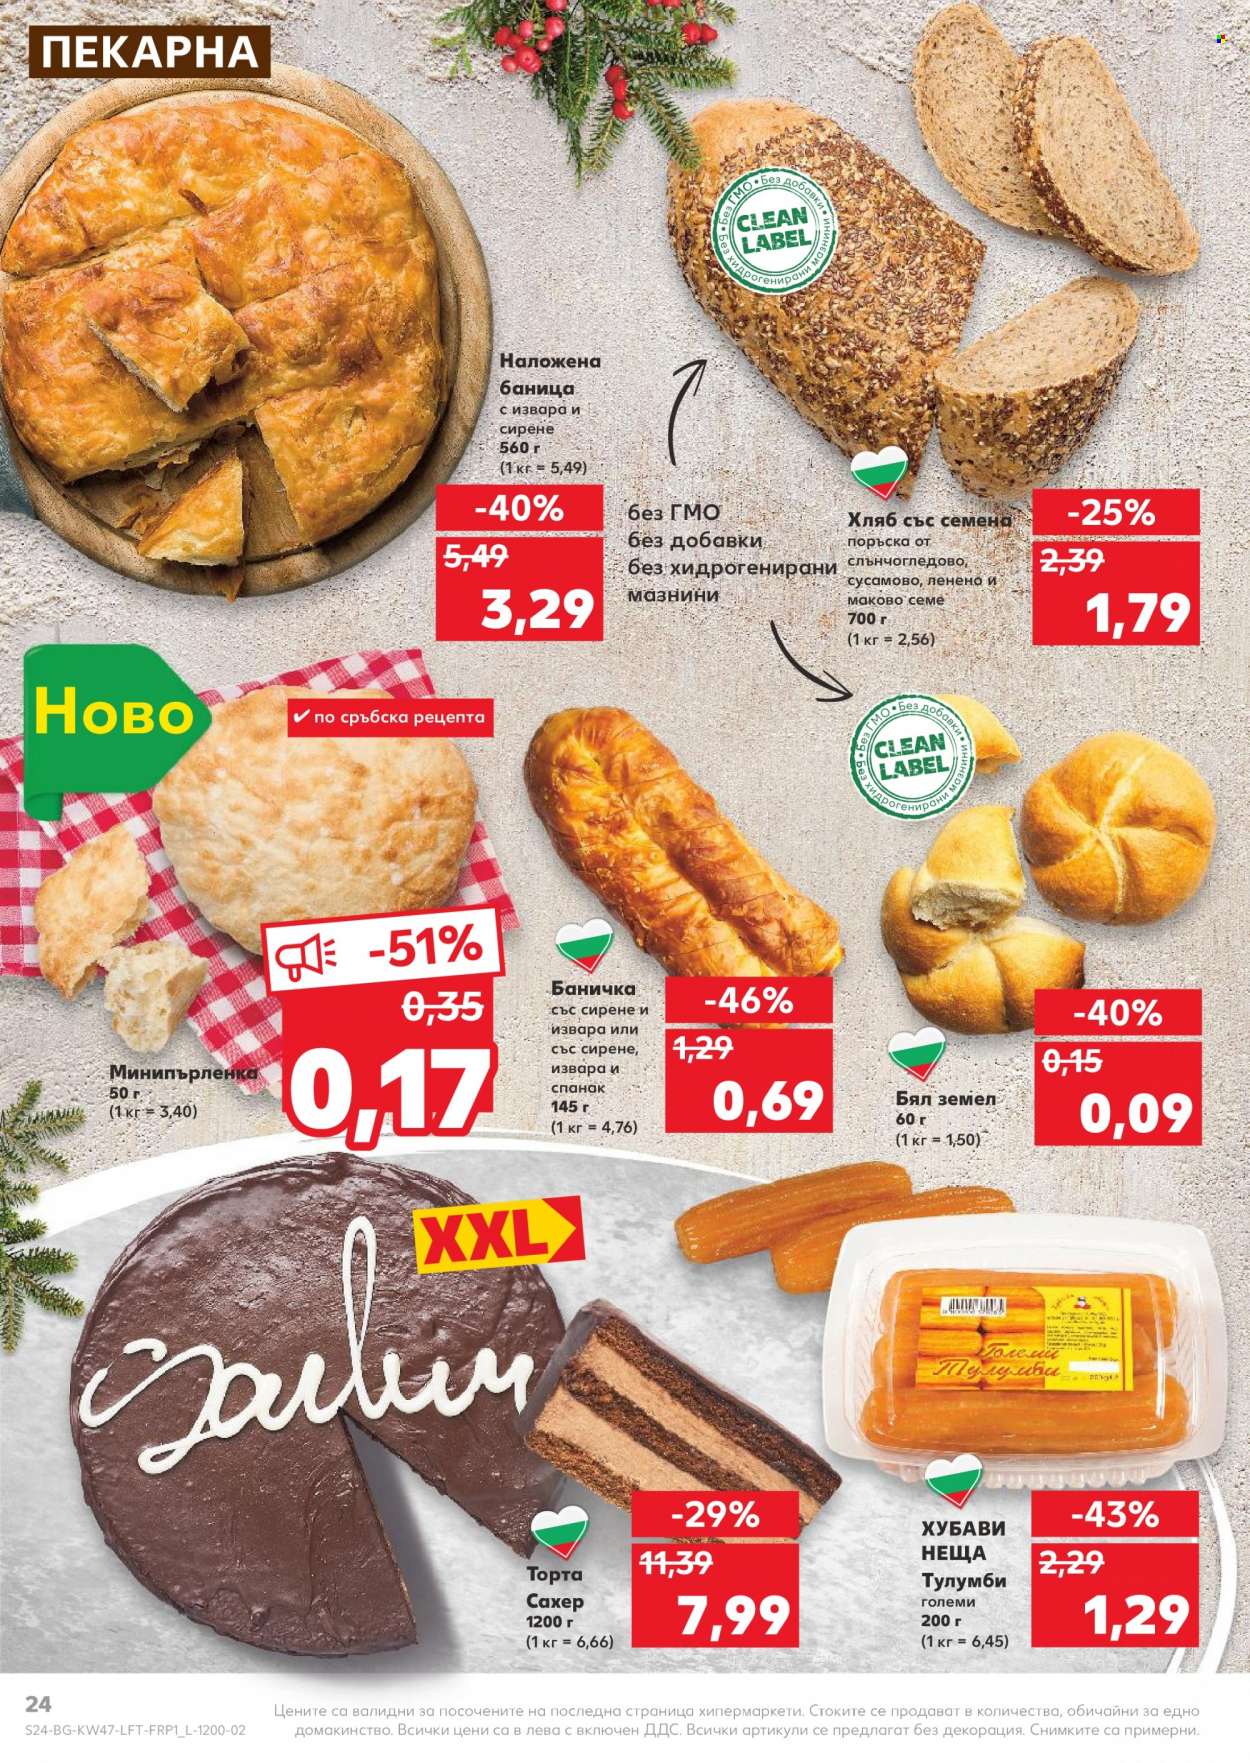 thumbnail - Брошура на Кауфланд - 22.11.2021 - 28.11.2021 - Продавани продукти - земел, хляб, хляб със семена, торта. Страница 24.